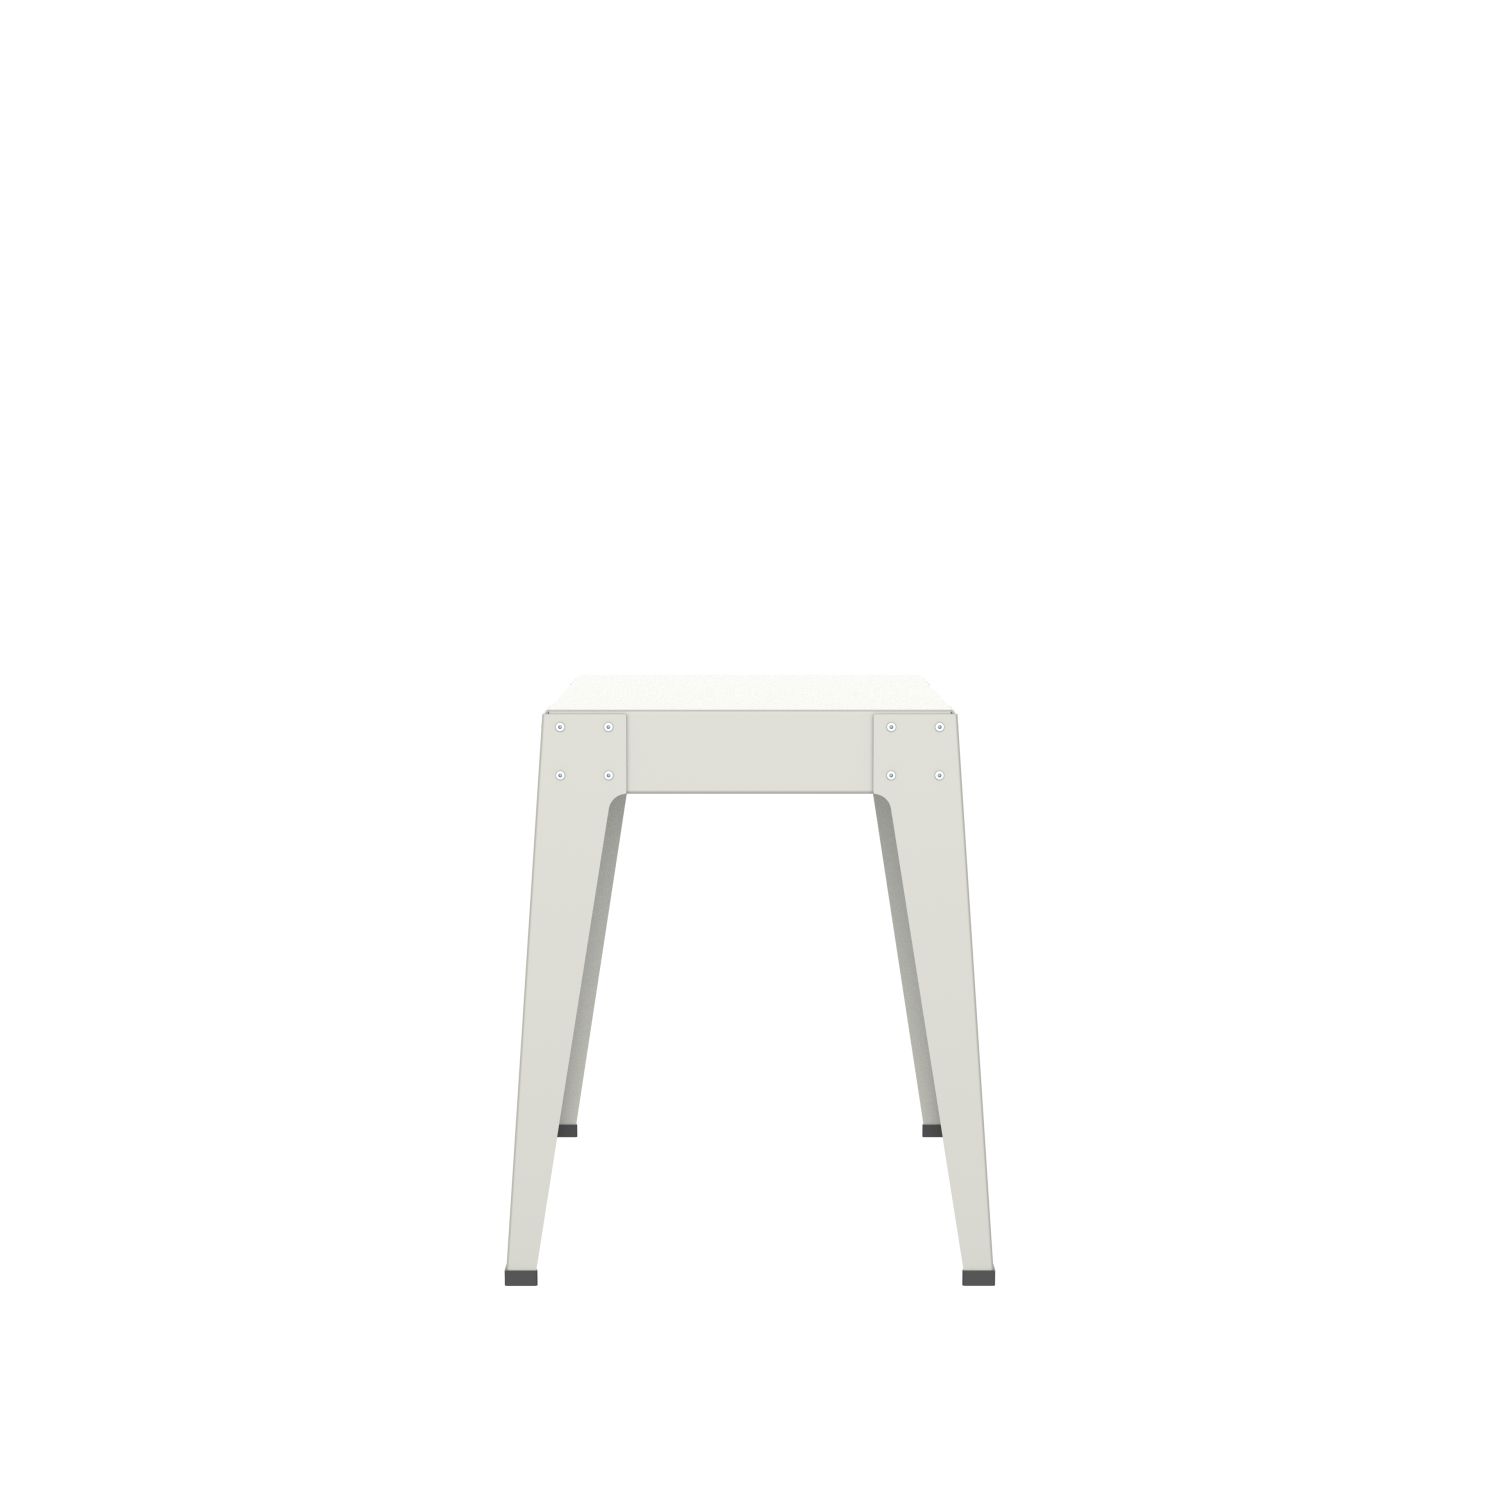 lensvelt piet hein eek aluminium series stool agata grey ral7038 soft leg ends